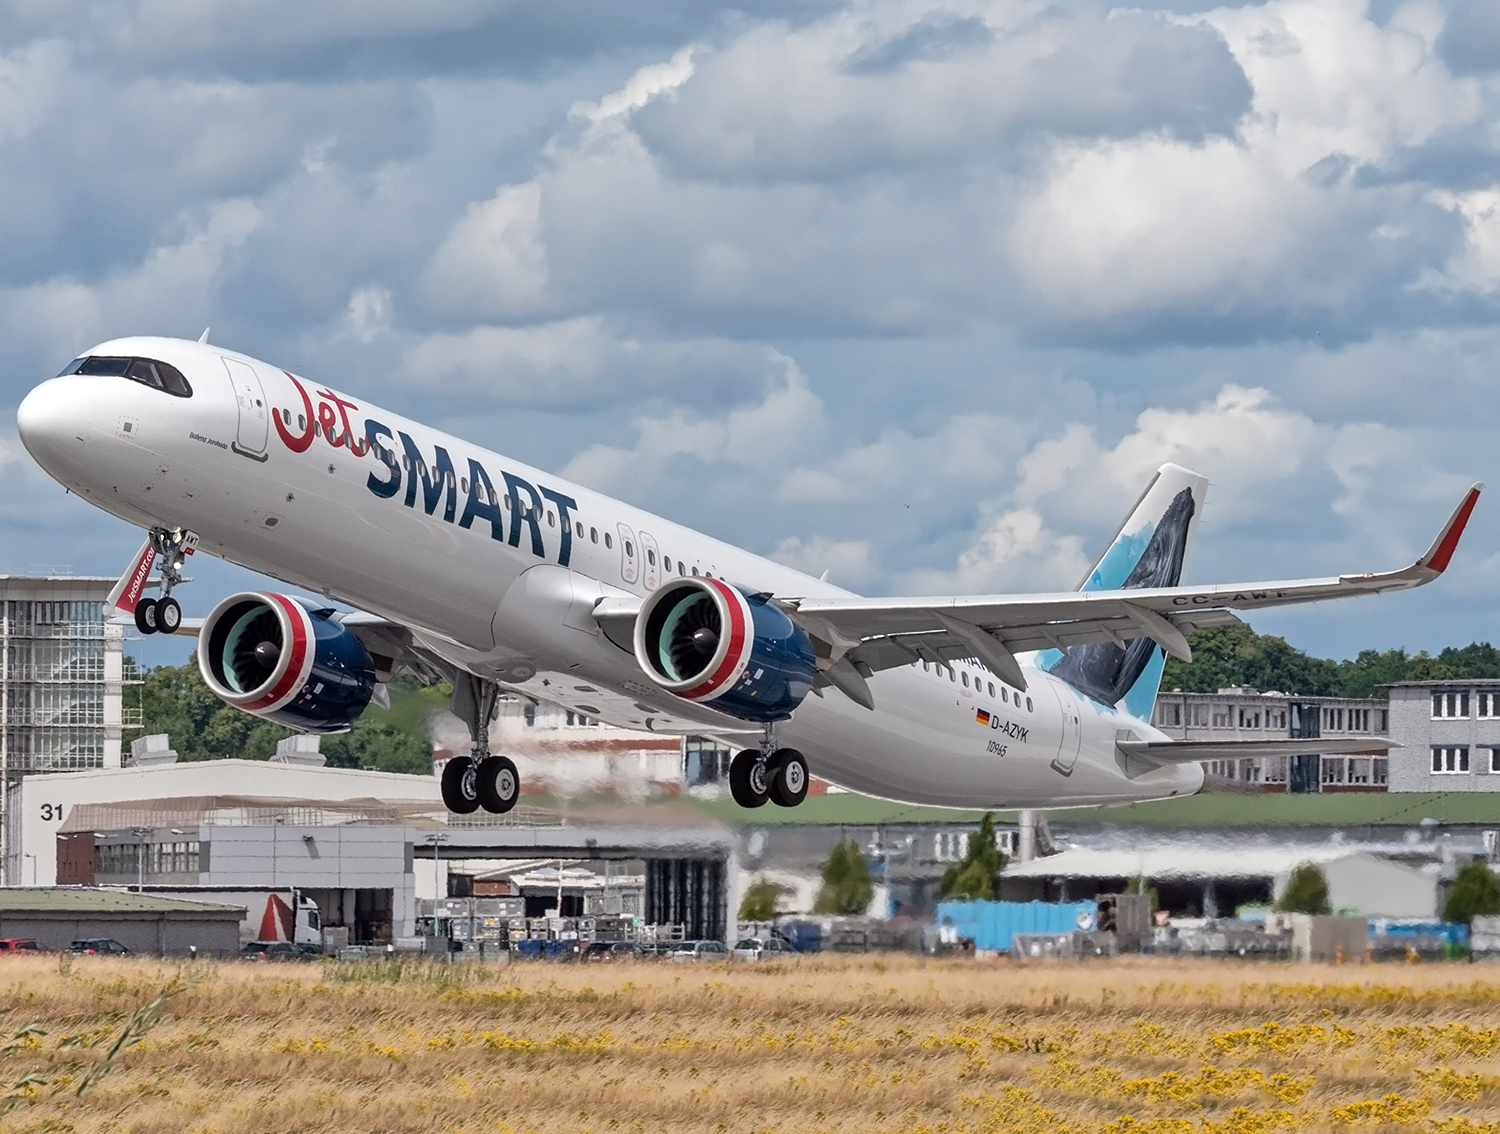 Photo: JetSMART A321neo. Photo Credit: Airbus Media